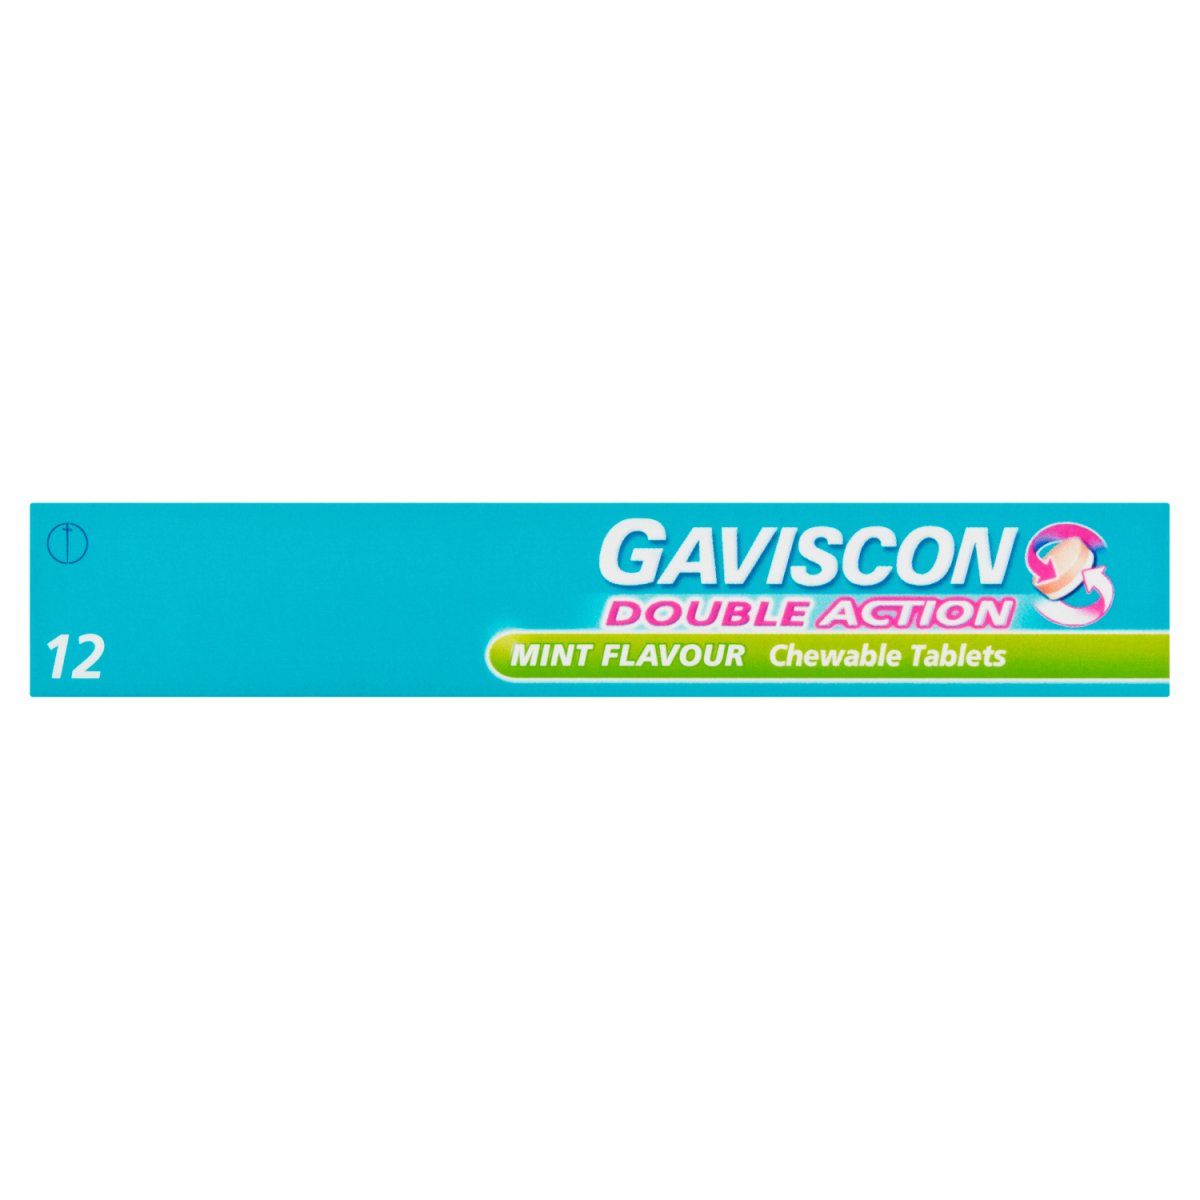 Gaviscon Double Action Tablets (med) - Intamarque - Wholesale 5000158071377